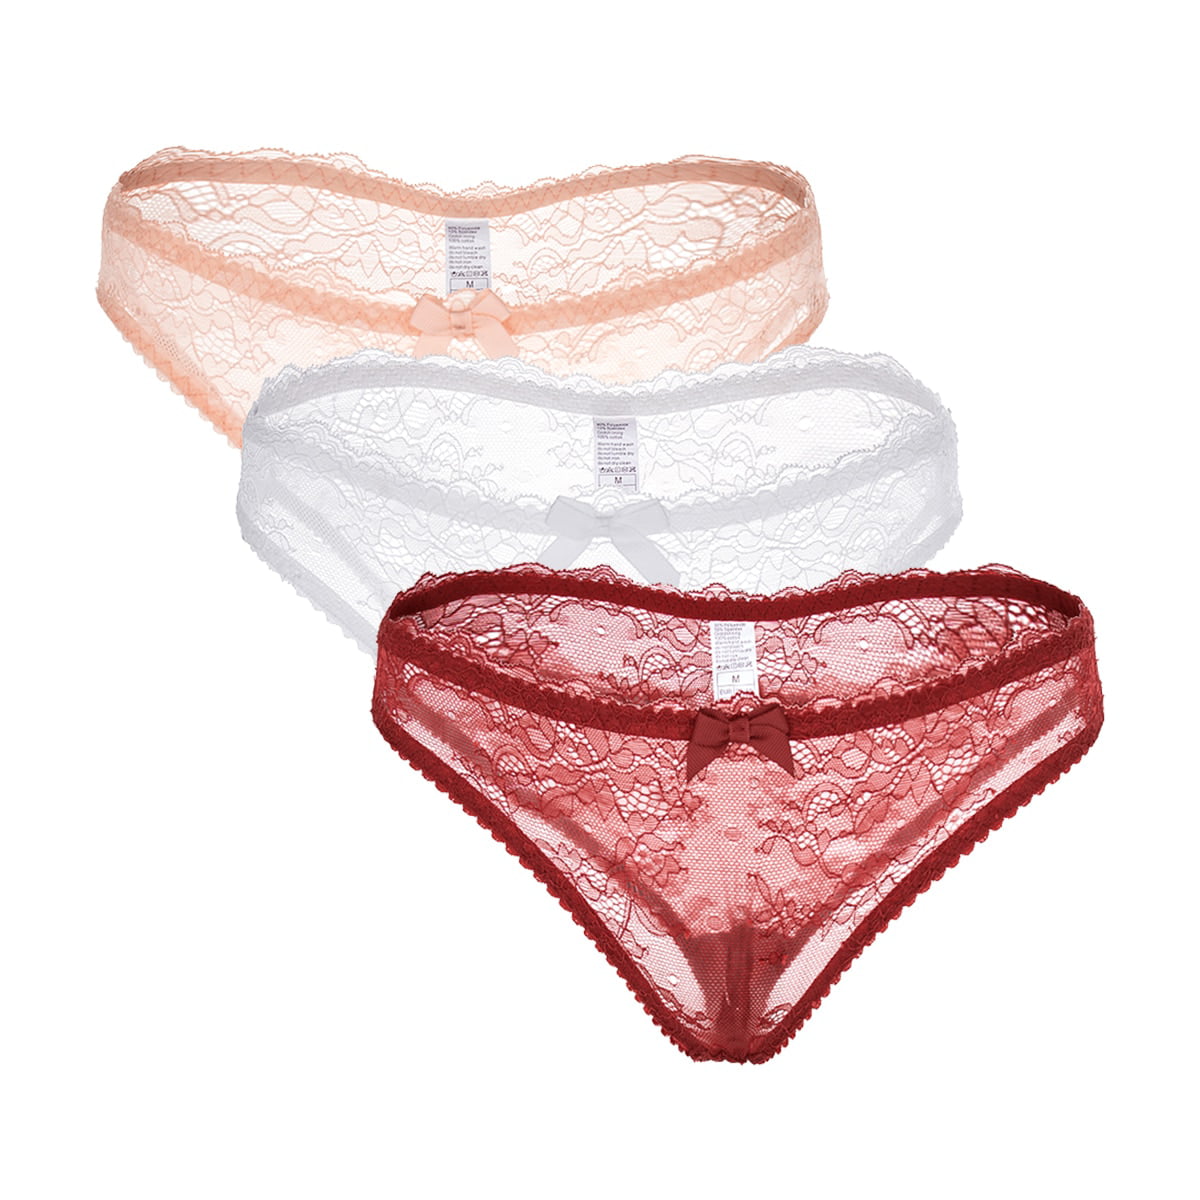 Details about   3 Pack Women High Waist Underwear Knickers Plus Size Bikini Thong Briefs Panties 